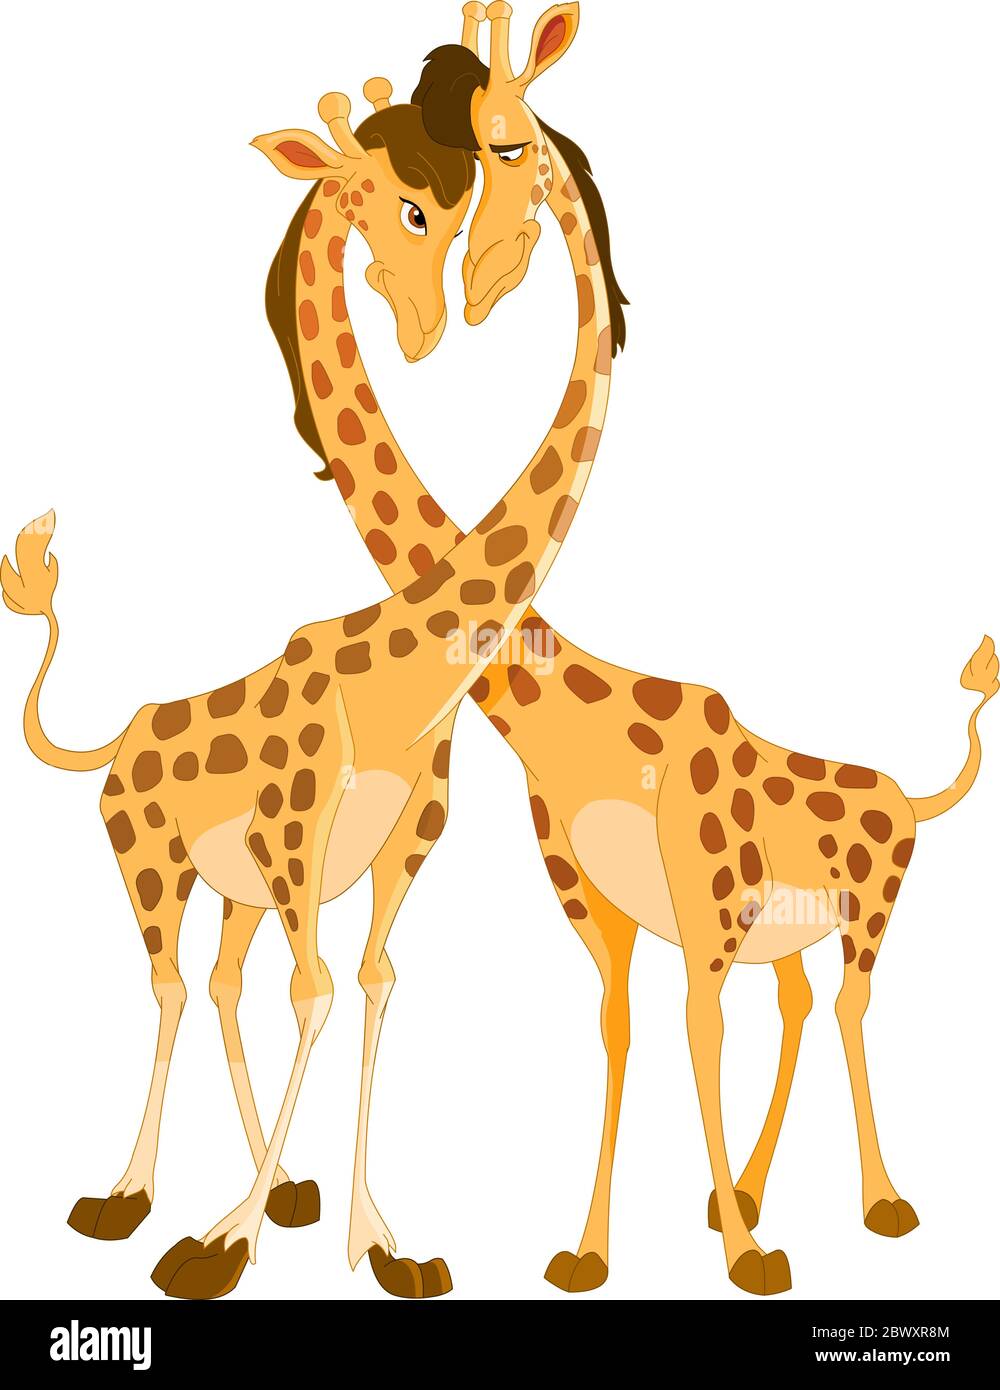 Giraffes in love Stock Vector